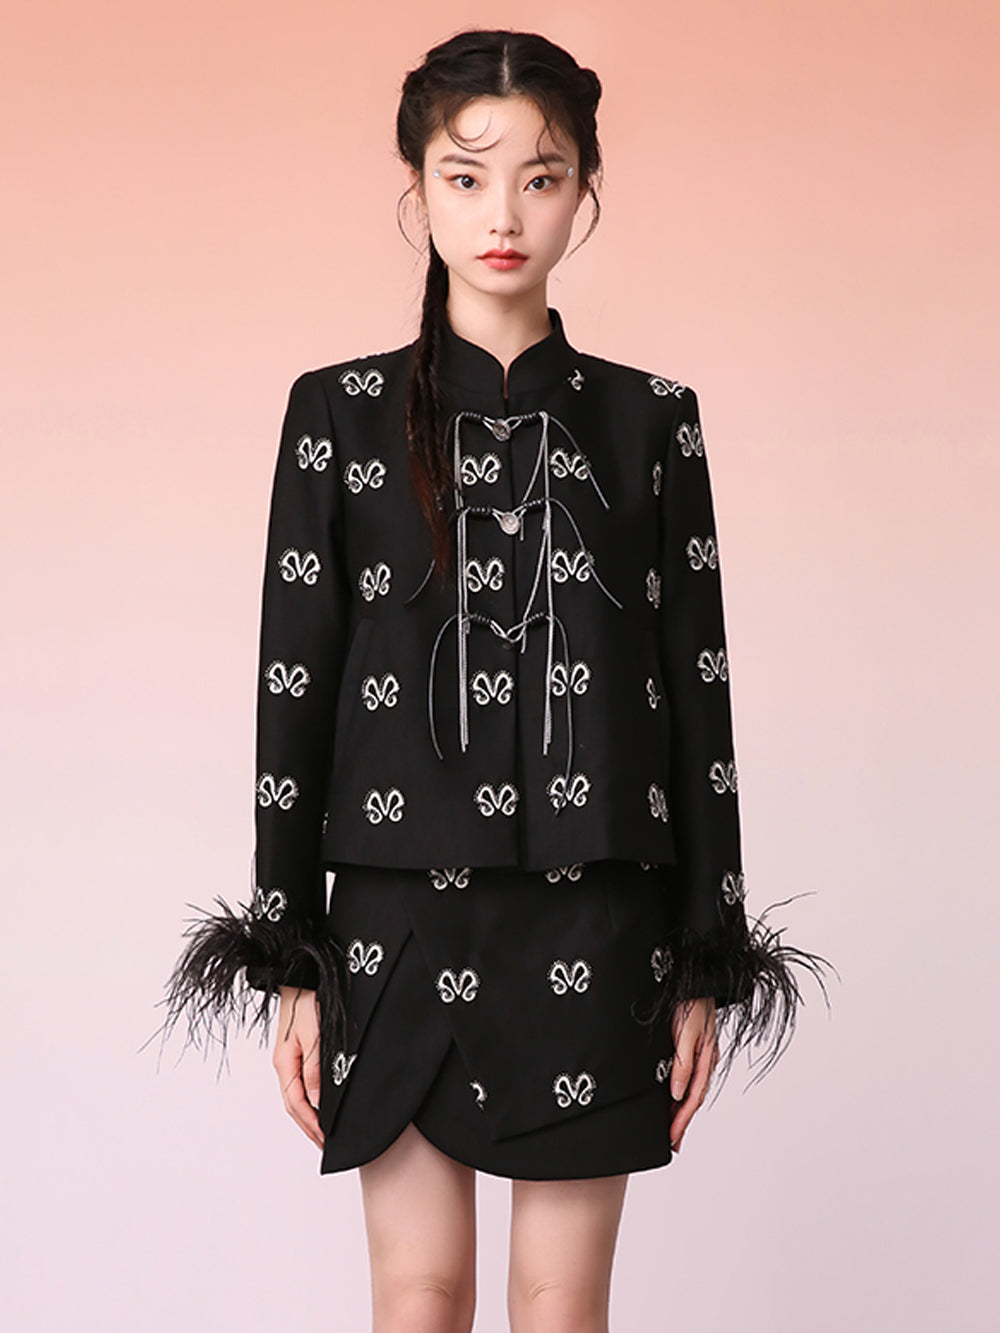 MUKZIN Original Chinese Style Black Classic Durable All-match Coat